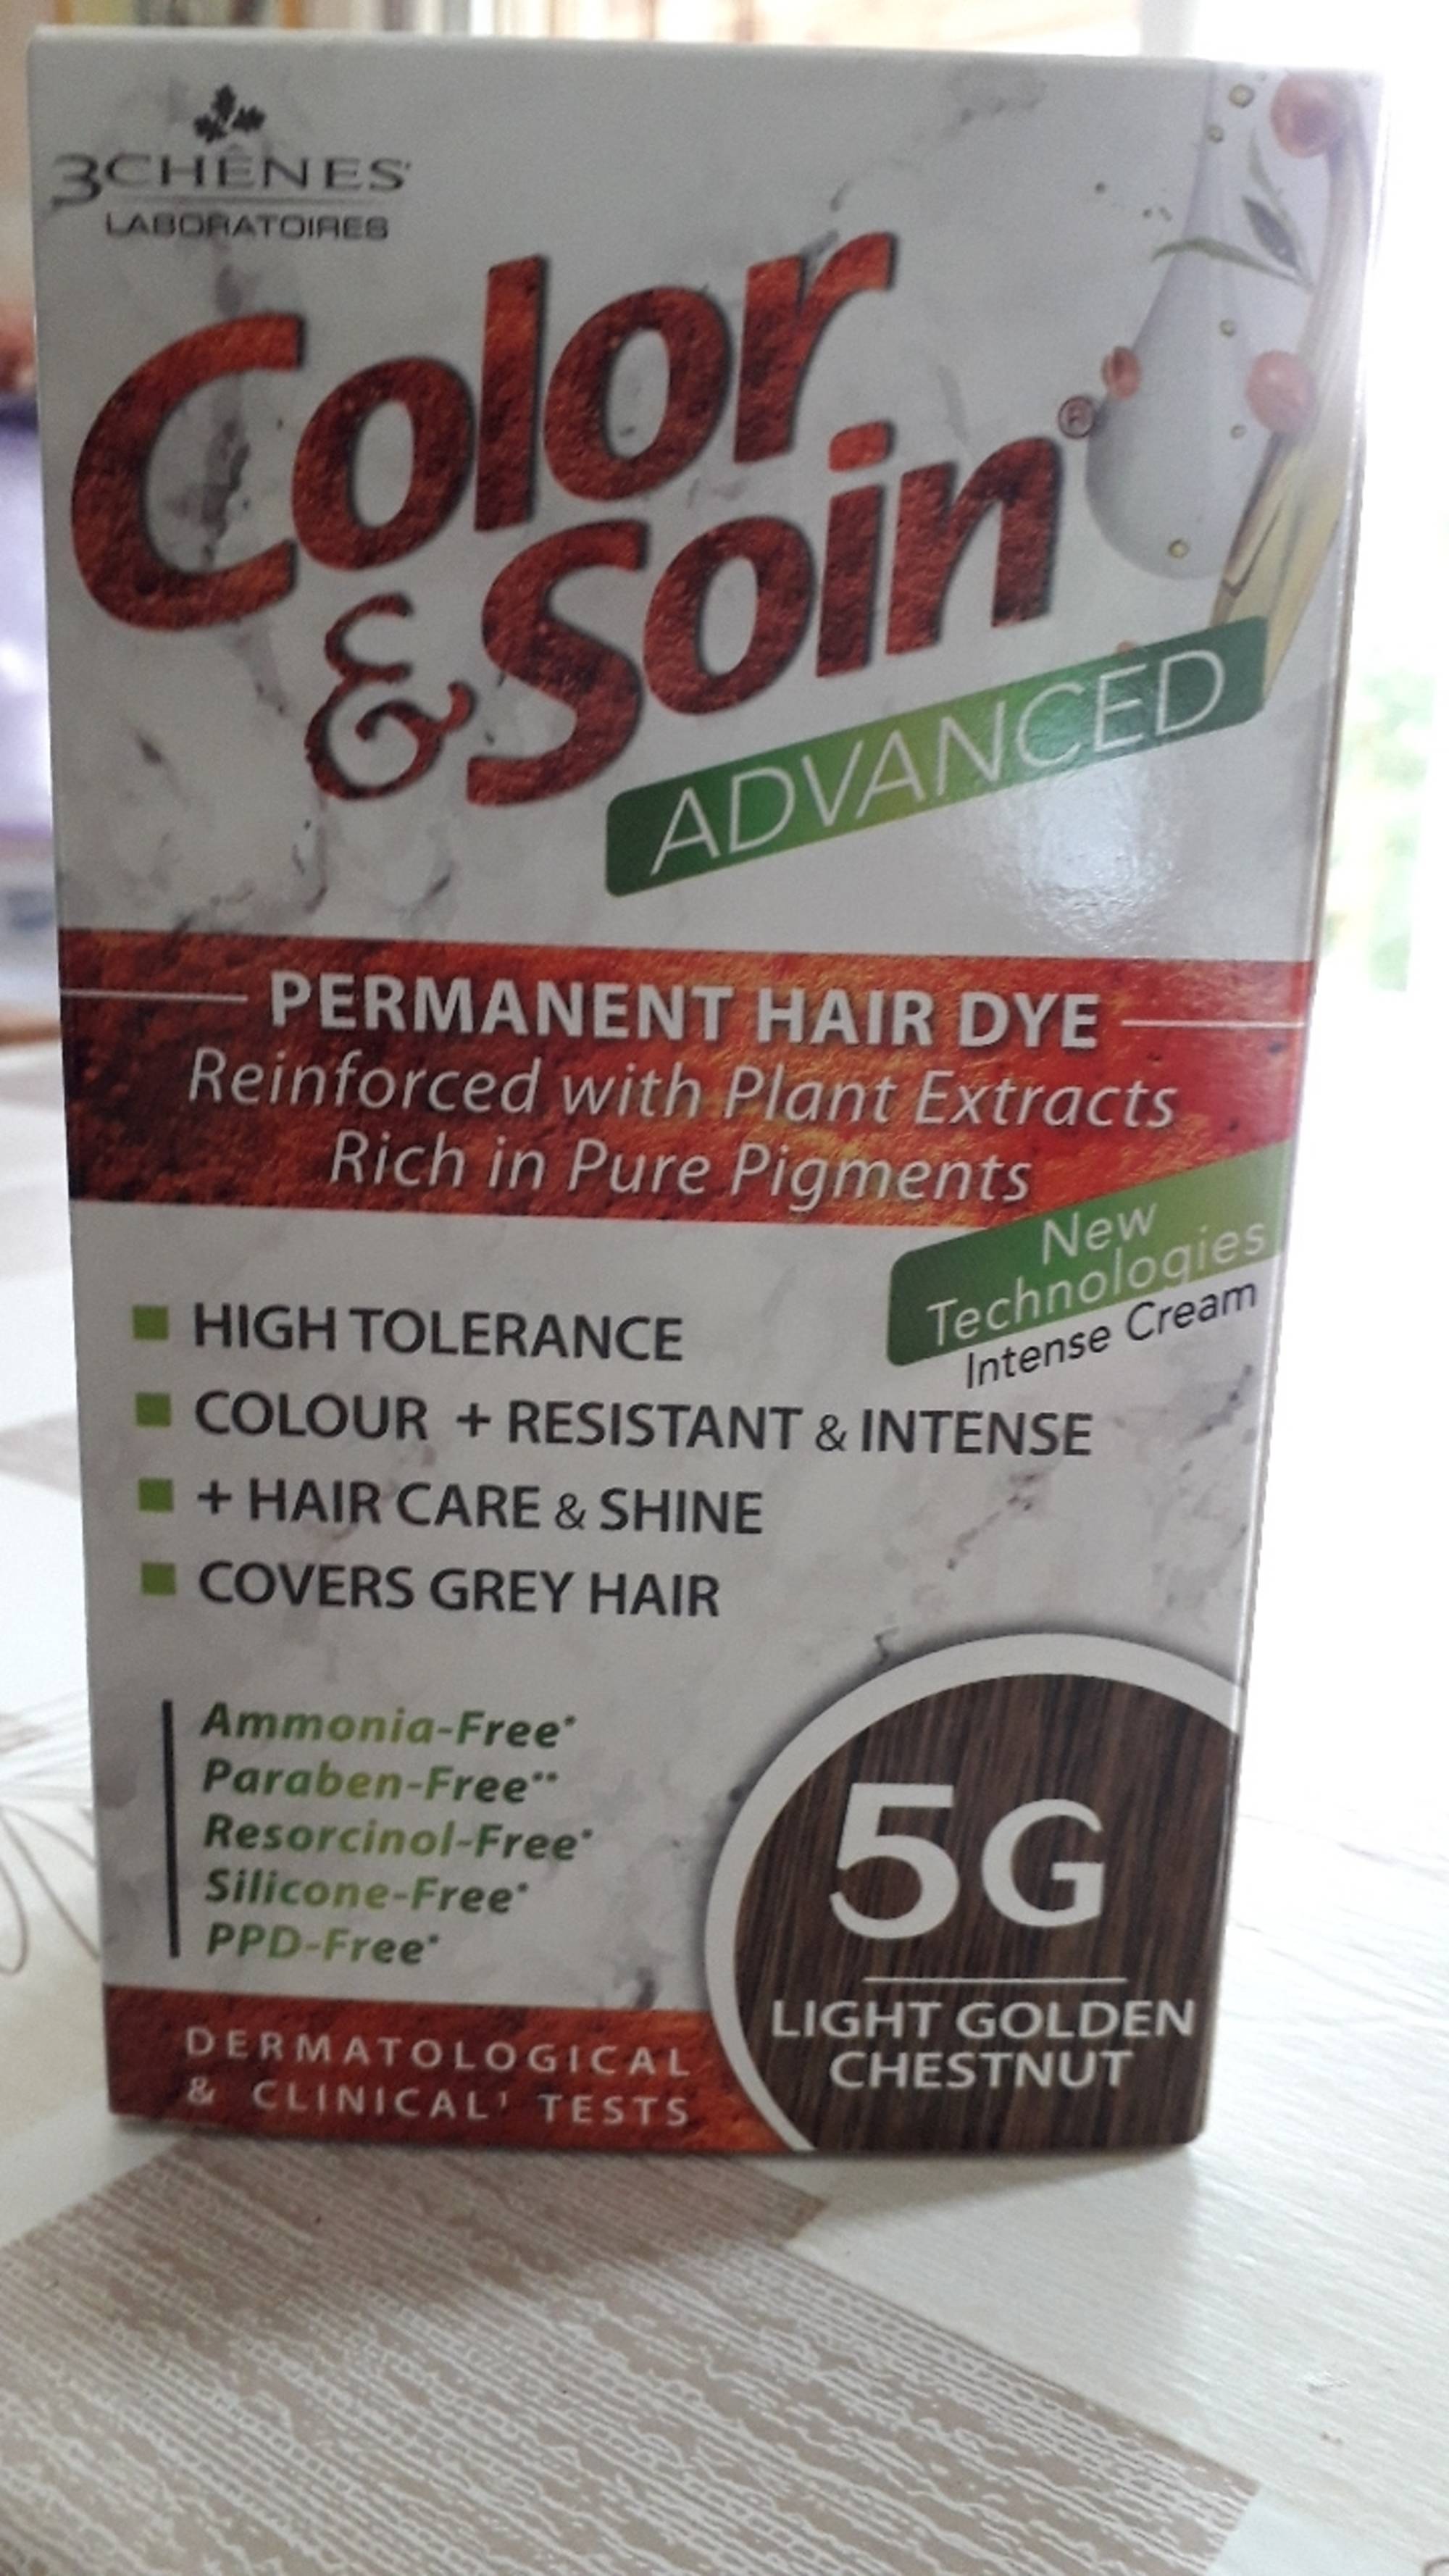 3 CHÊNES - Color & soin advanced - Permanent hair dye 5G light golden chestnut